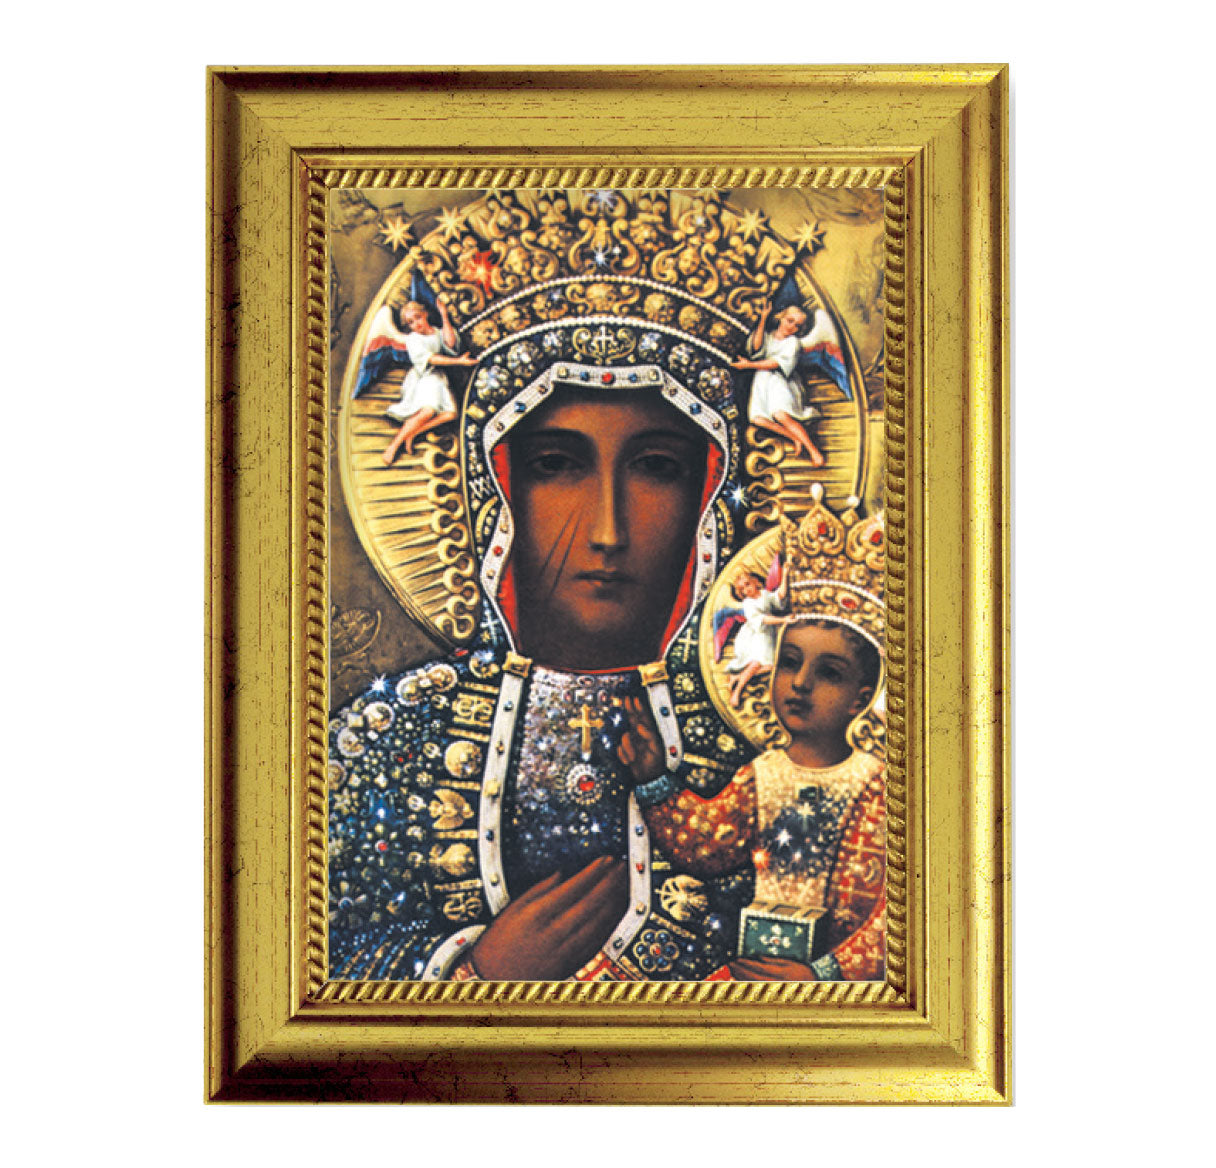 Our Lady of Czestochowa Gold-Leaf Framed Art